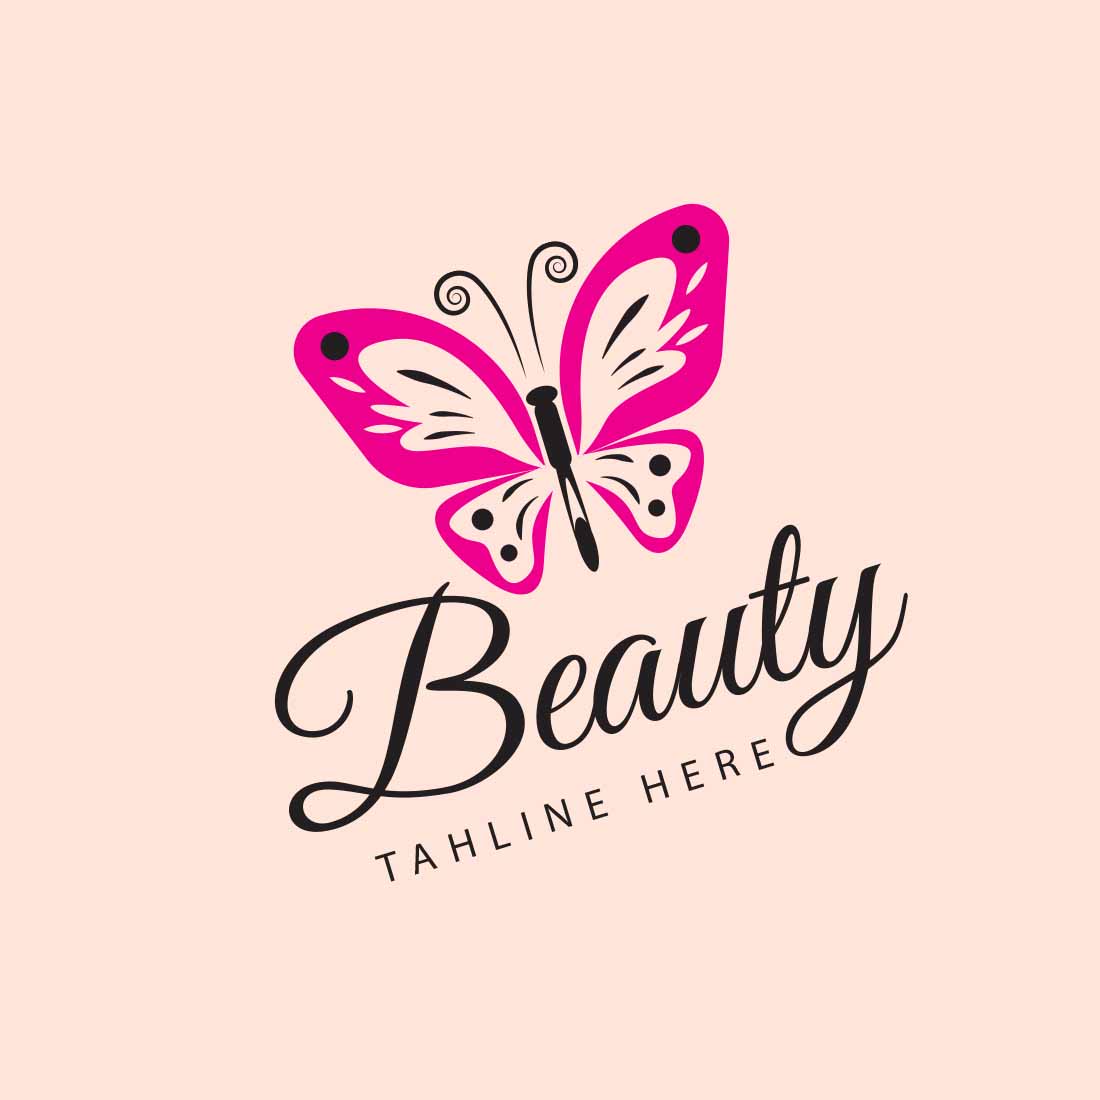 Creative Beauty Salon Logo Template facebook image.